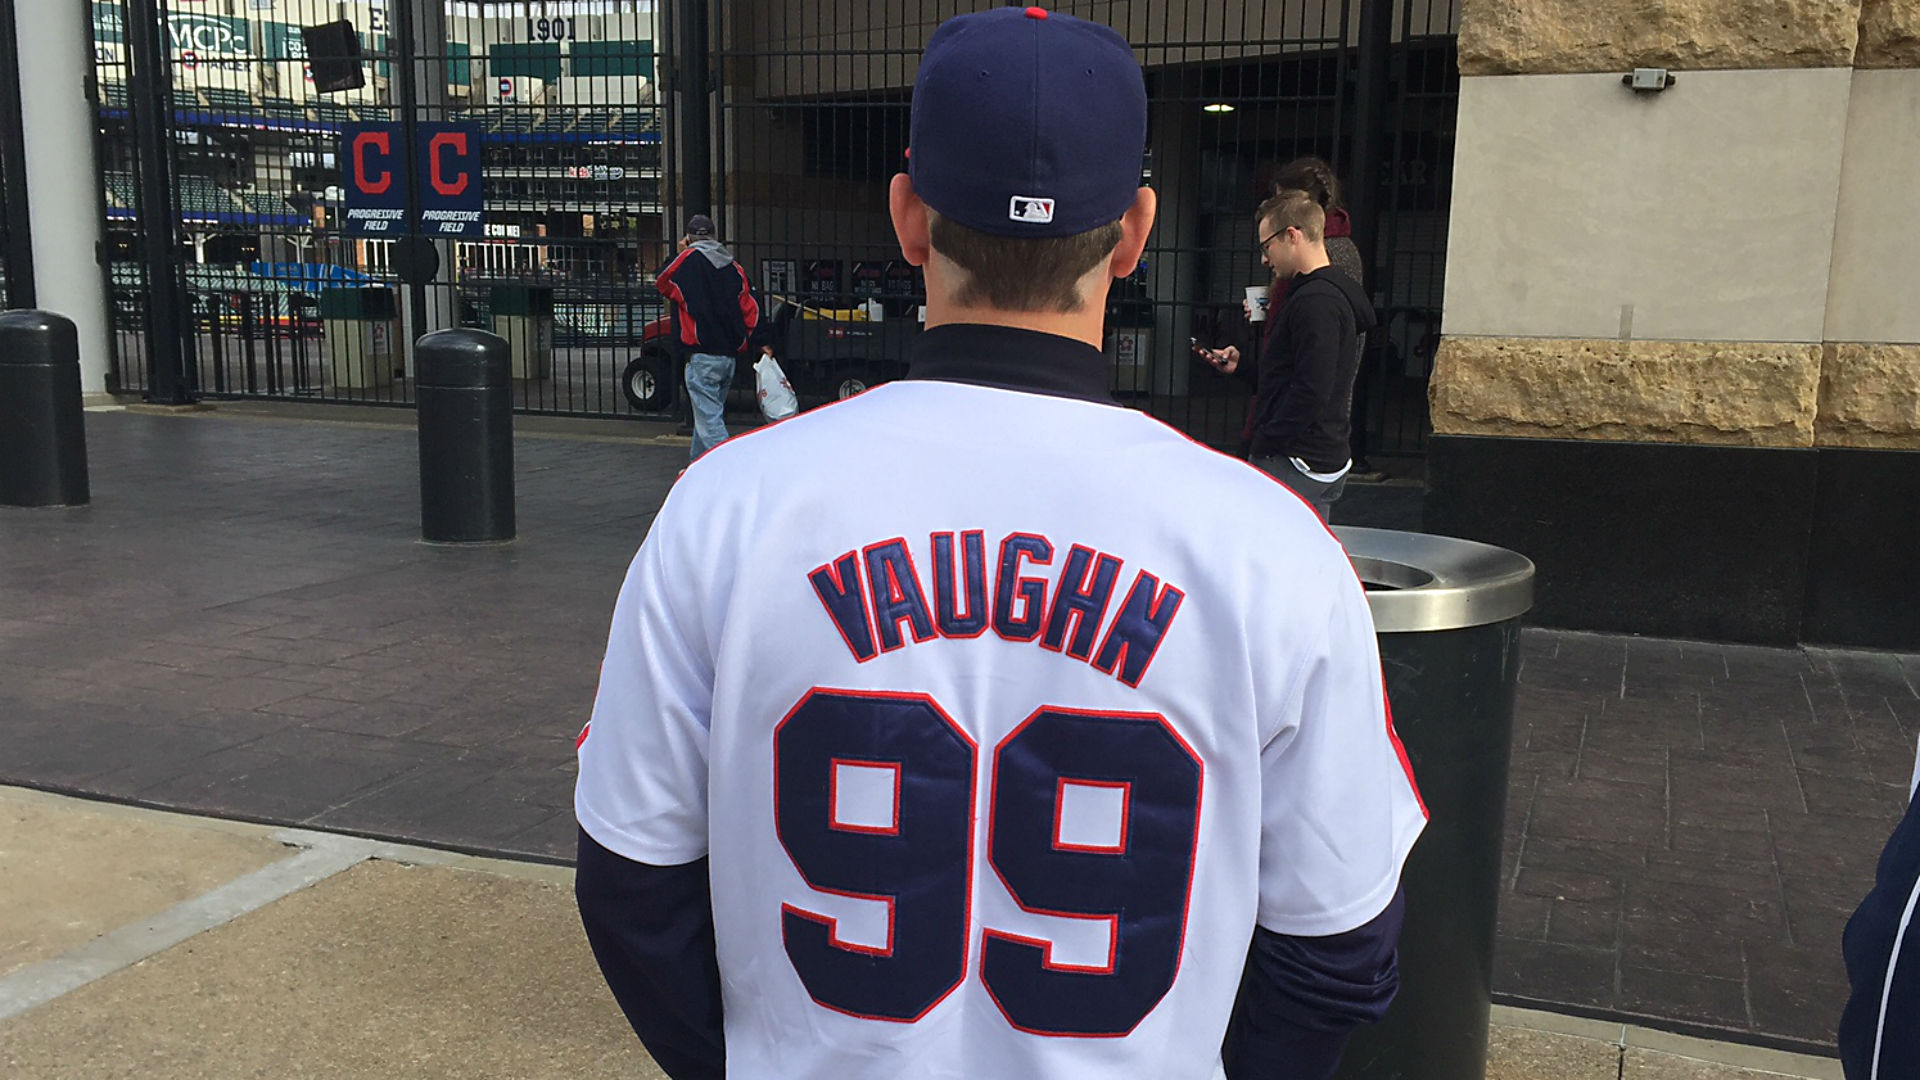 Rick Vaughn Wild Thing Major League Baseball Jersey